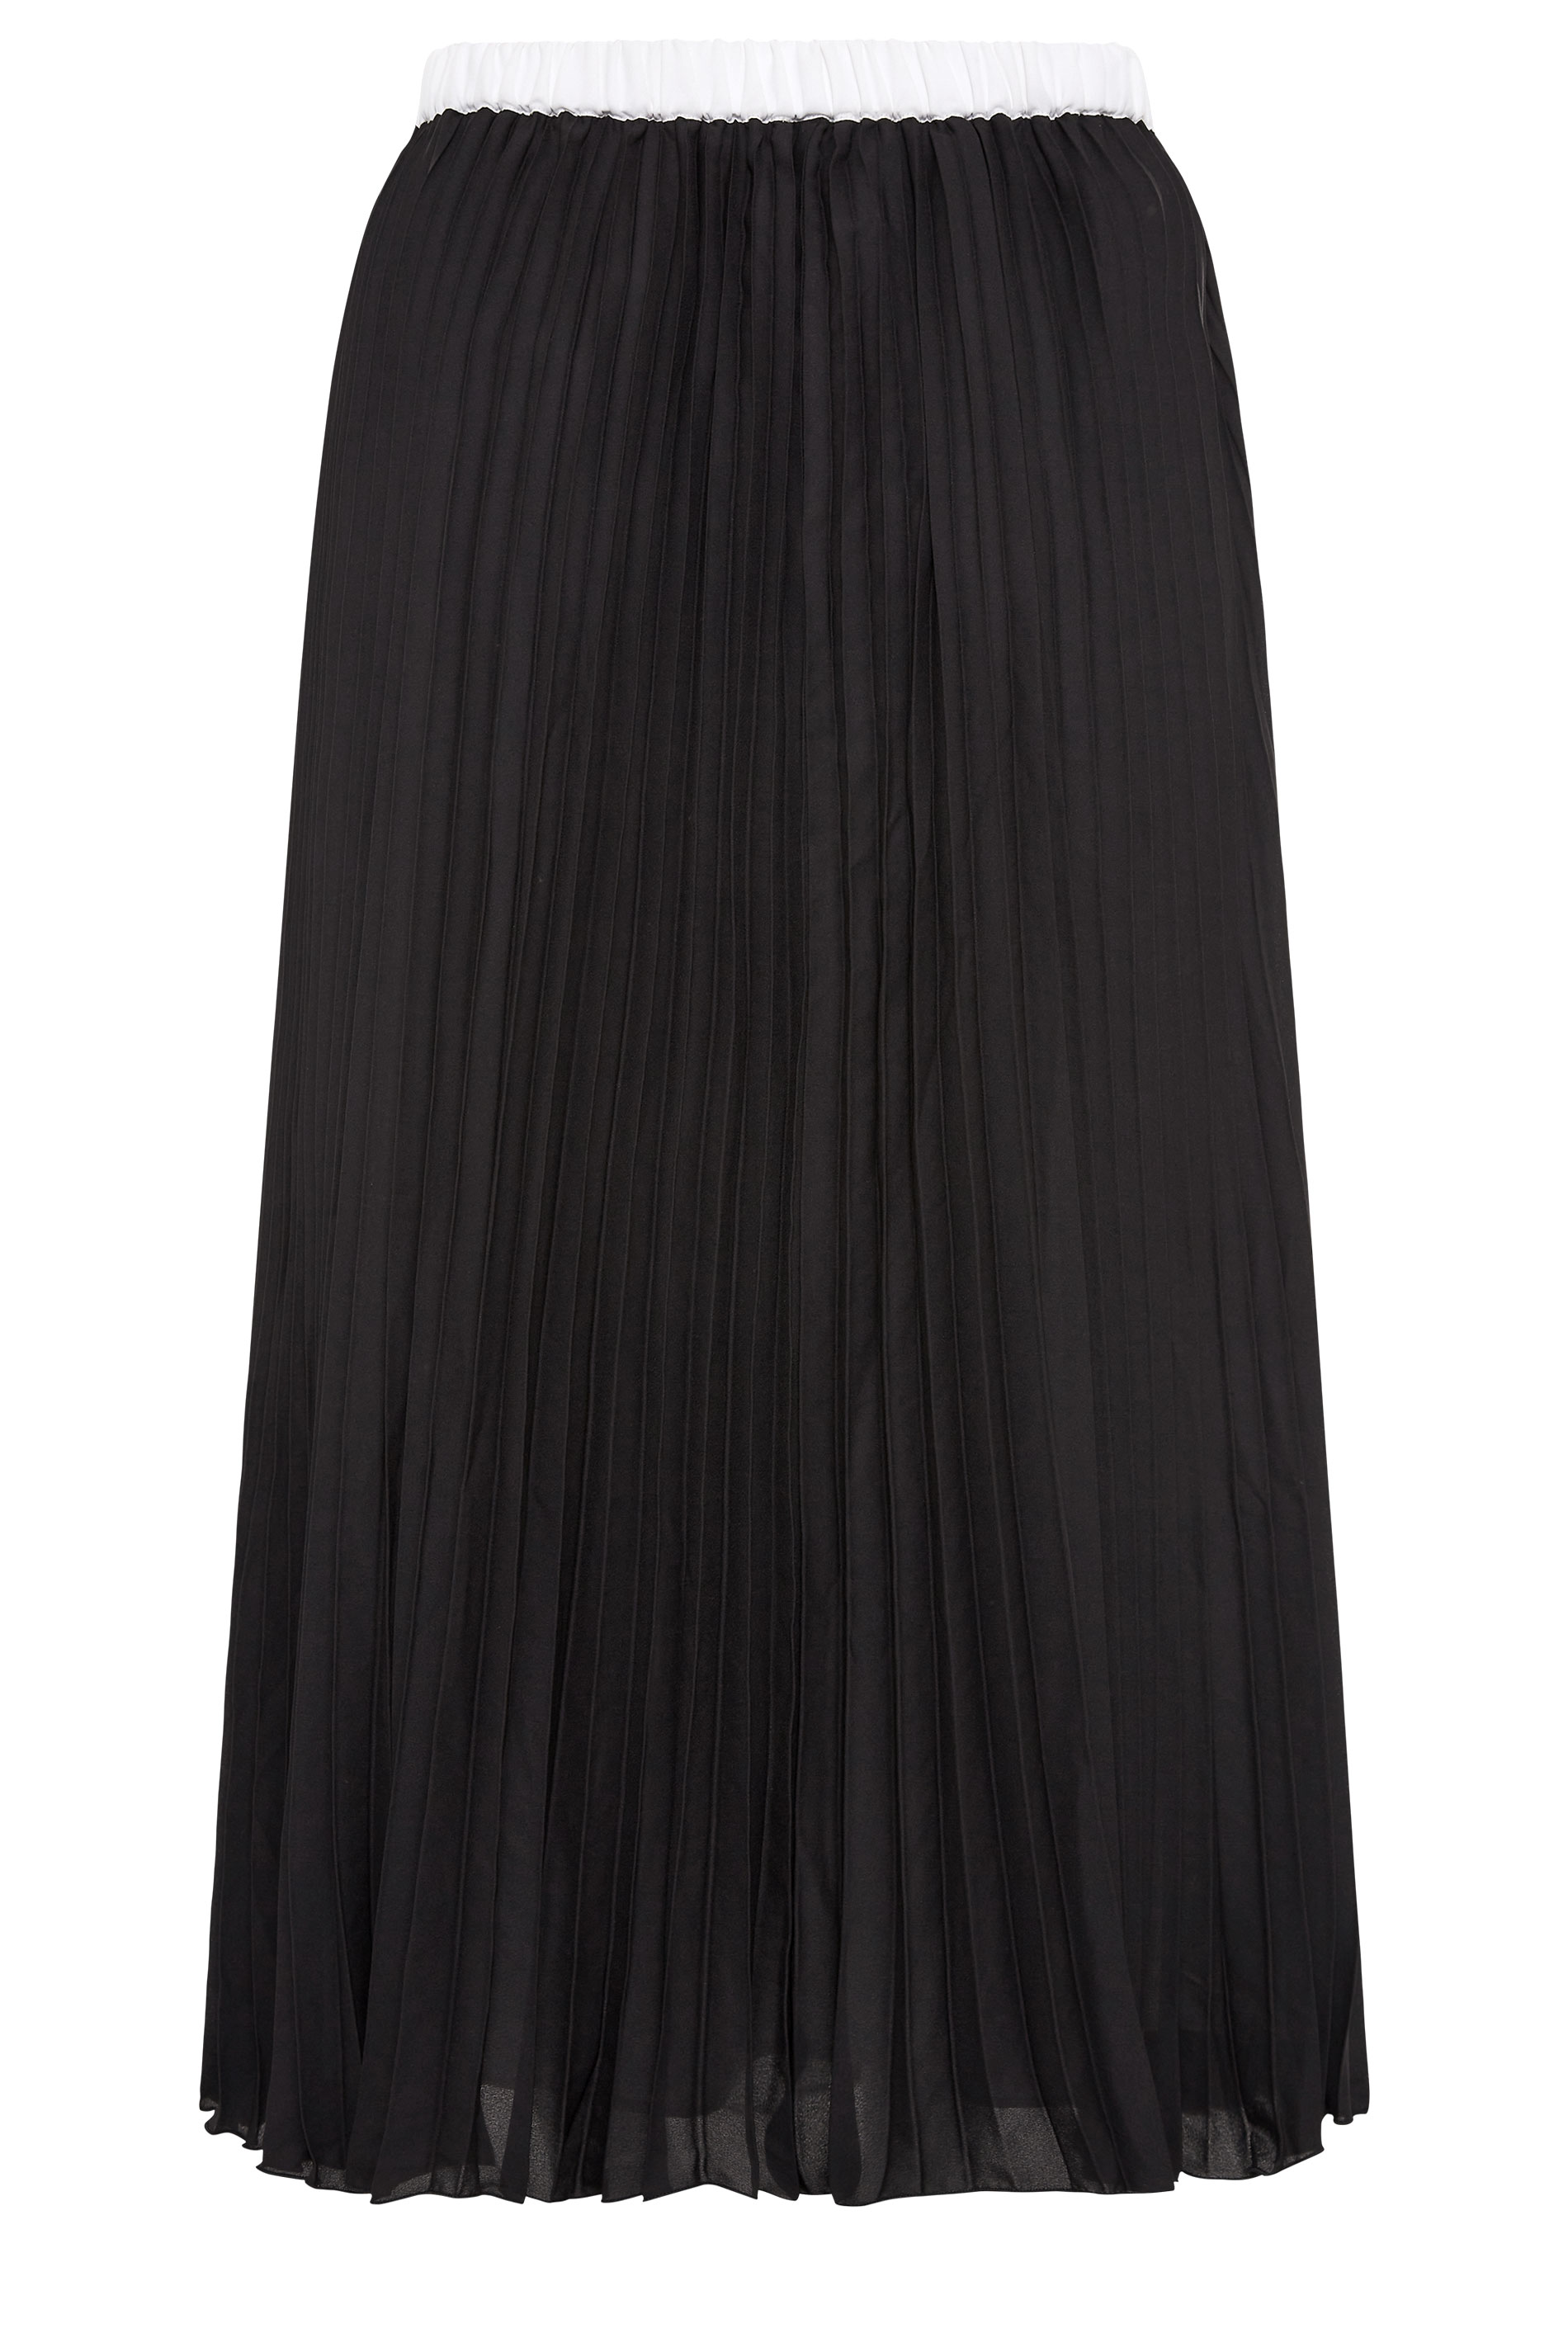 YOURS LONDON Curve Plus Size Black Colour Block Pleated Maxi Skirt ...